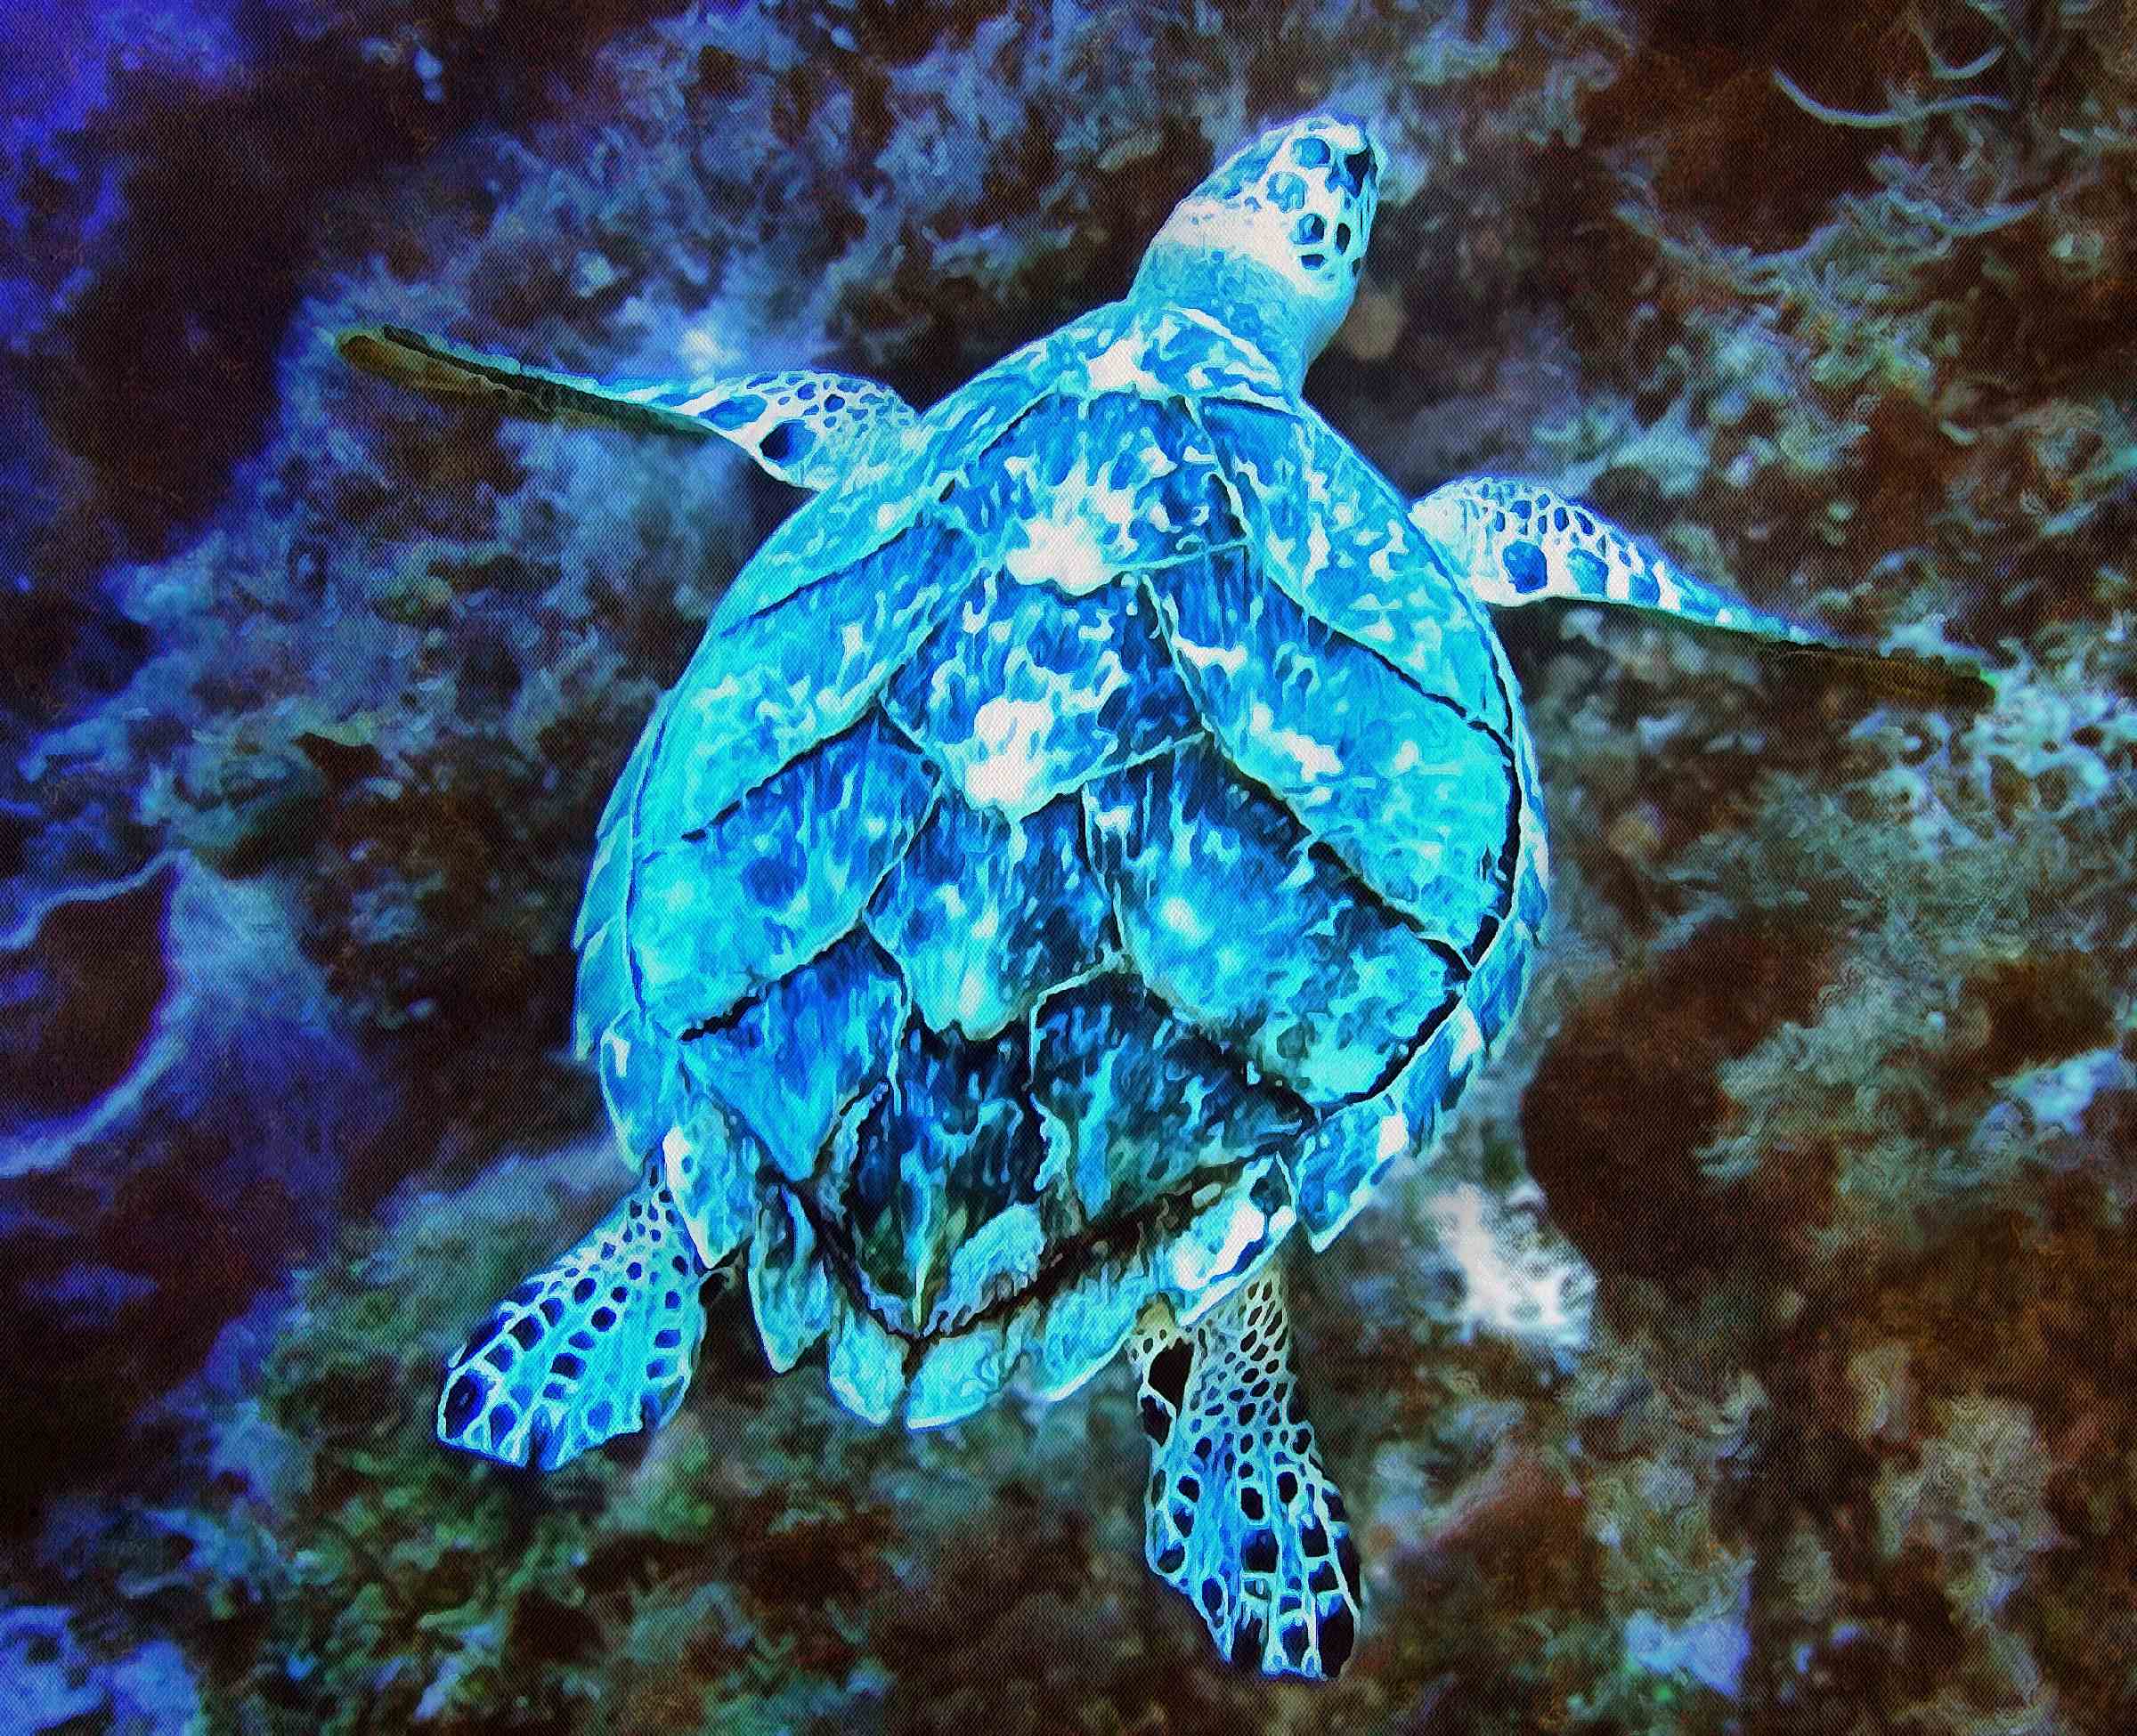 Tortoise, Turtle free images,  – Turtle public domain images, Tortoise free , Turtle stock free images, free images turtles, tortoise free , tortoise public domain images!